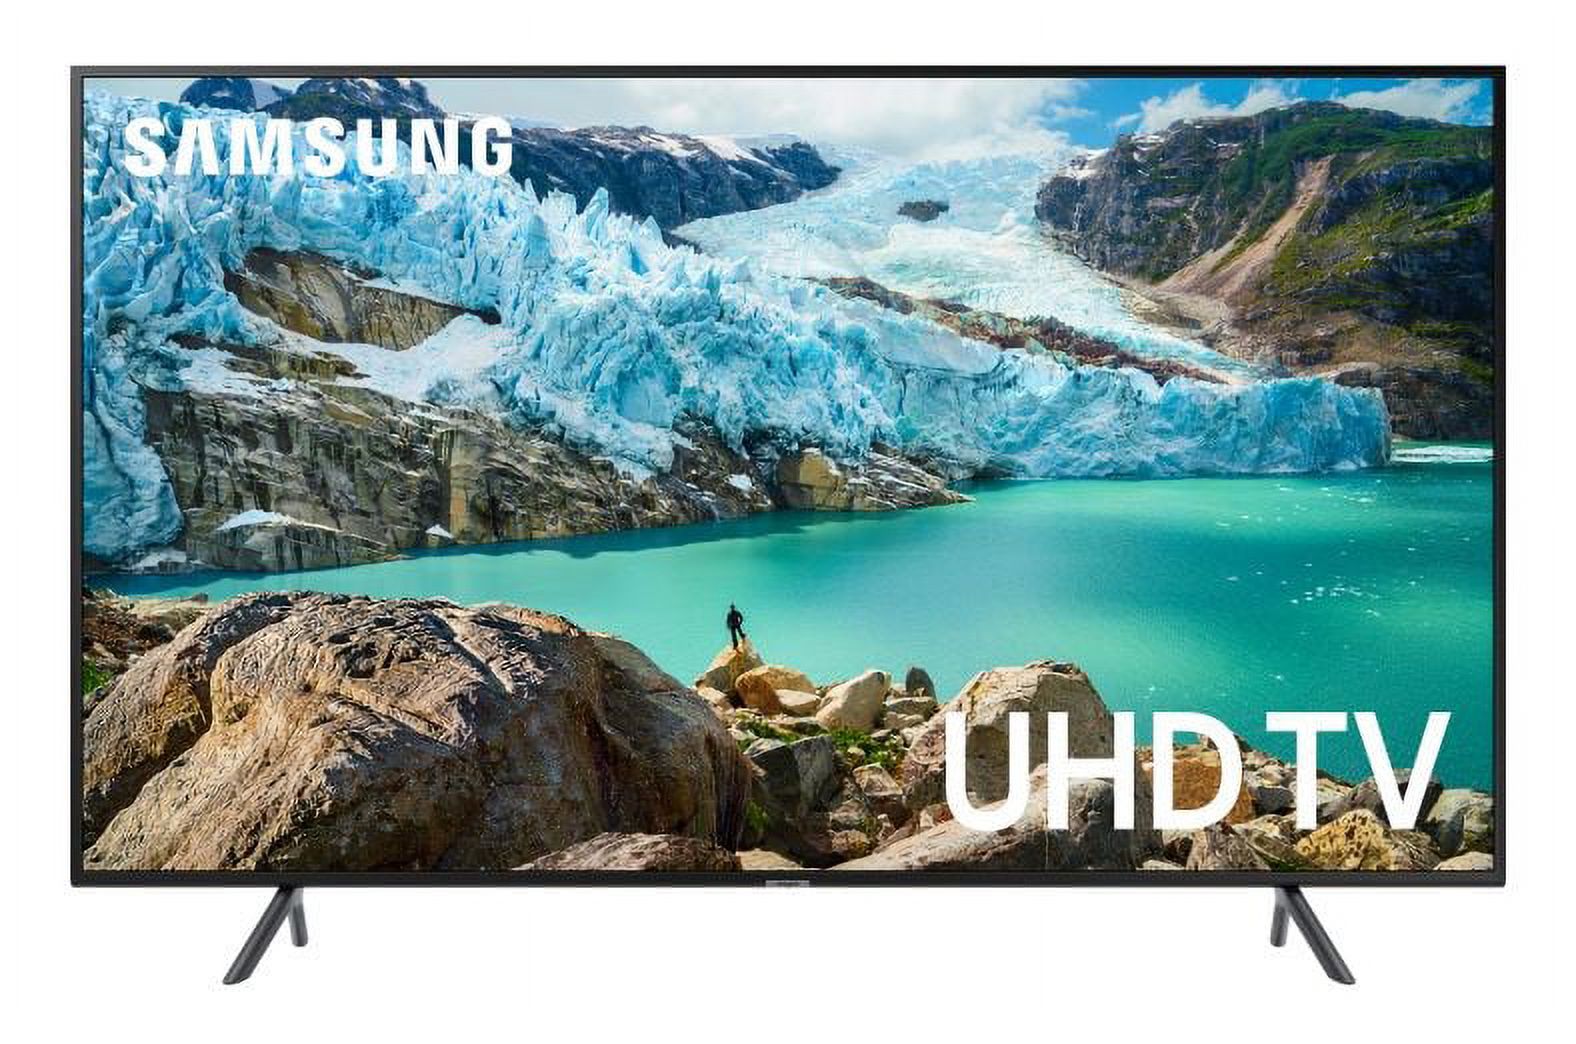 SAMSUNG 58" Class 4K Ultra HD (2160P) HDR Smart LED TV UN58RU7100 (2019 Model) - image 1 of 9